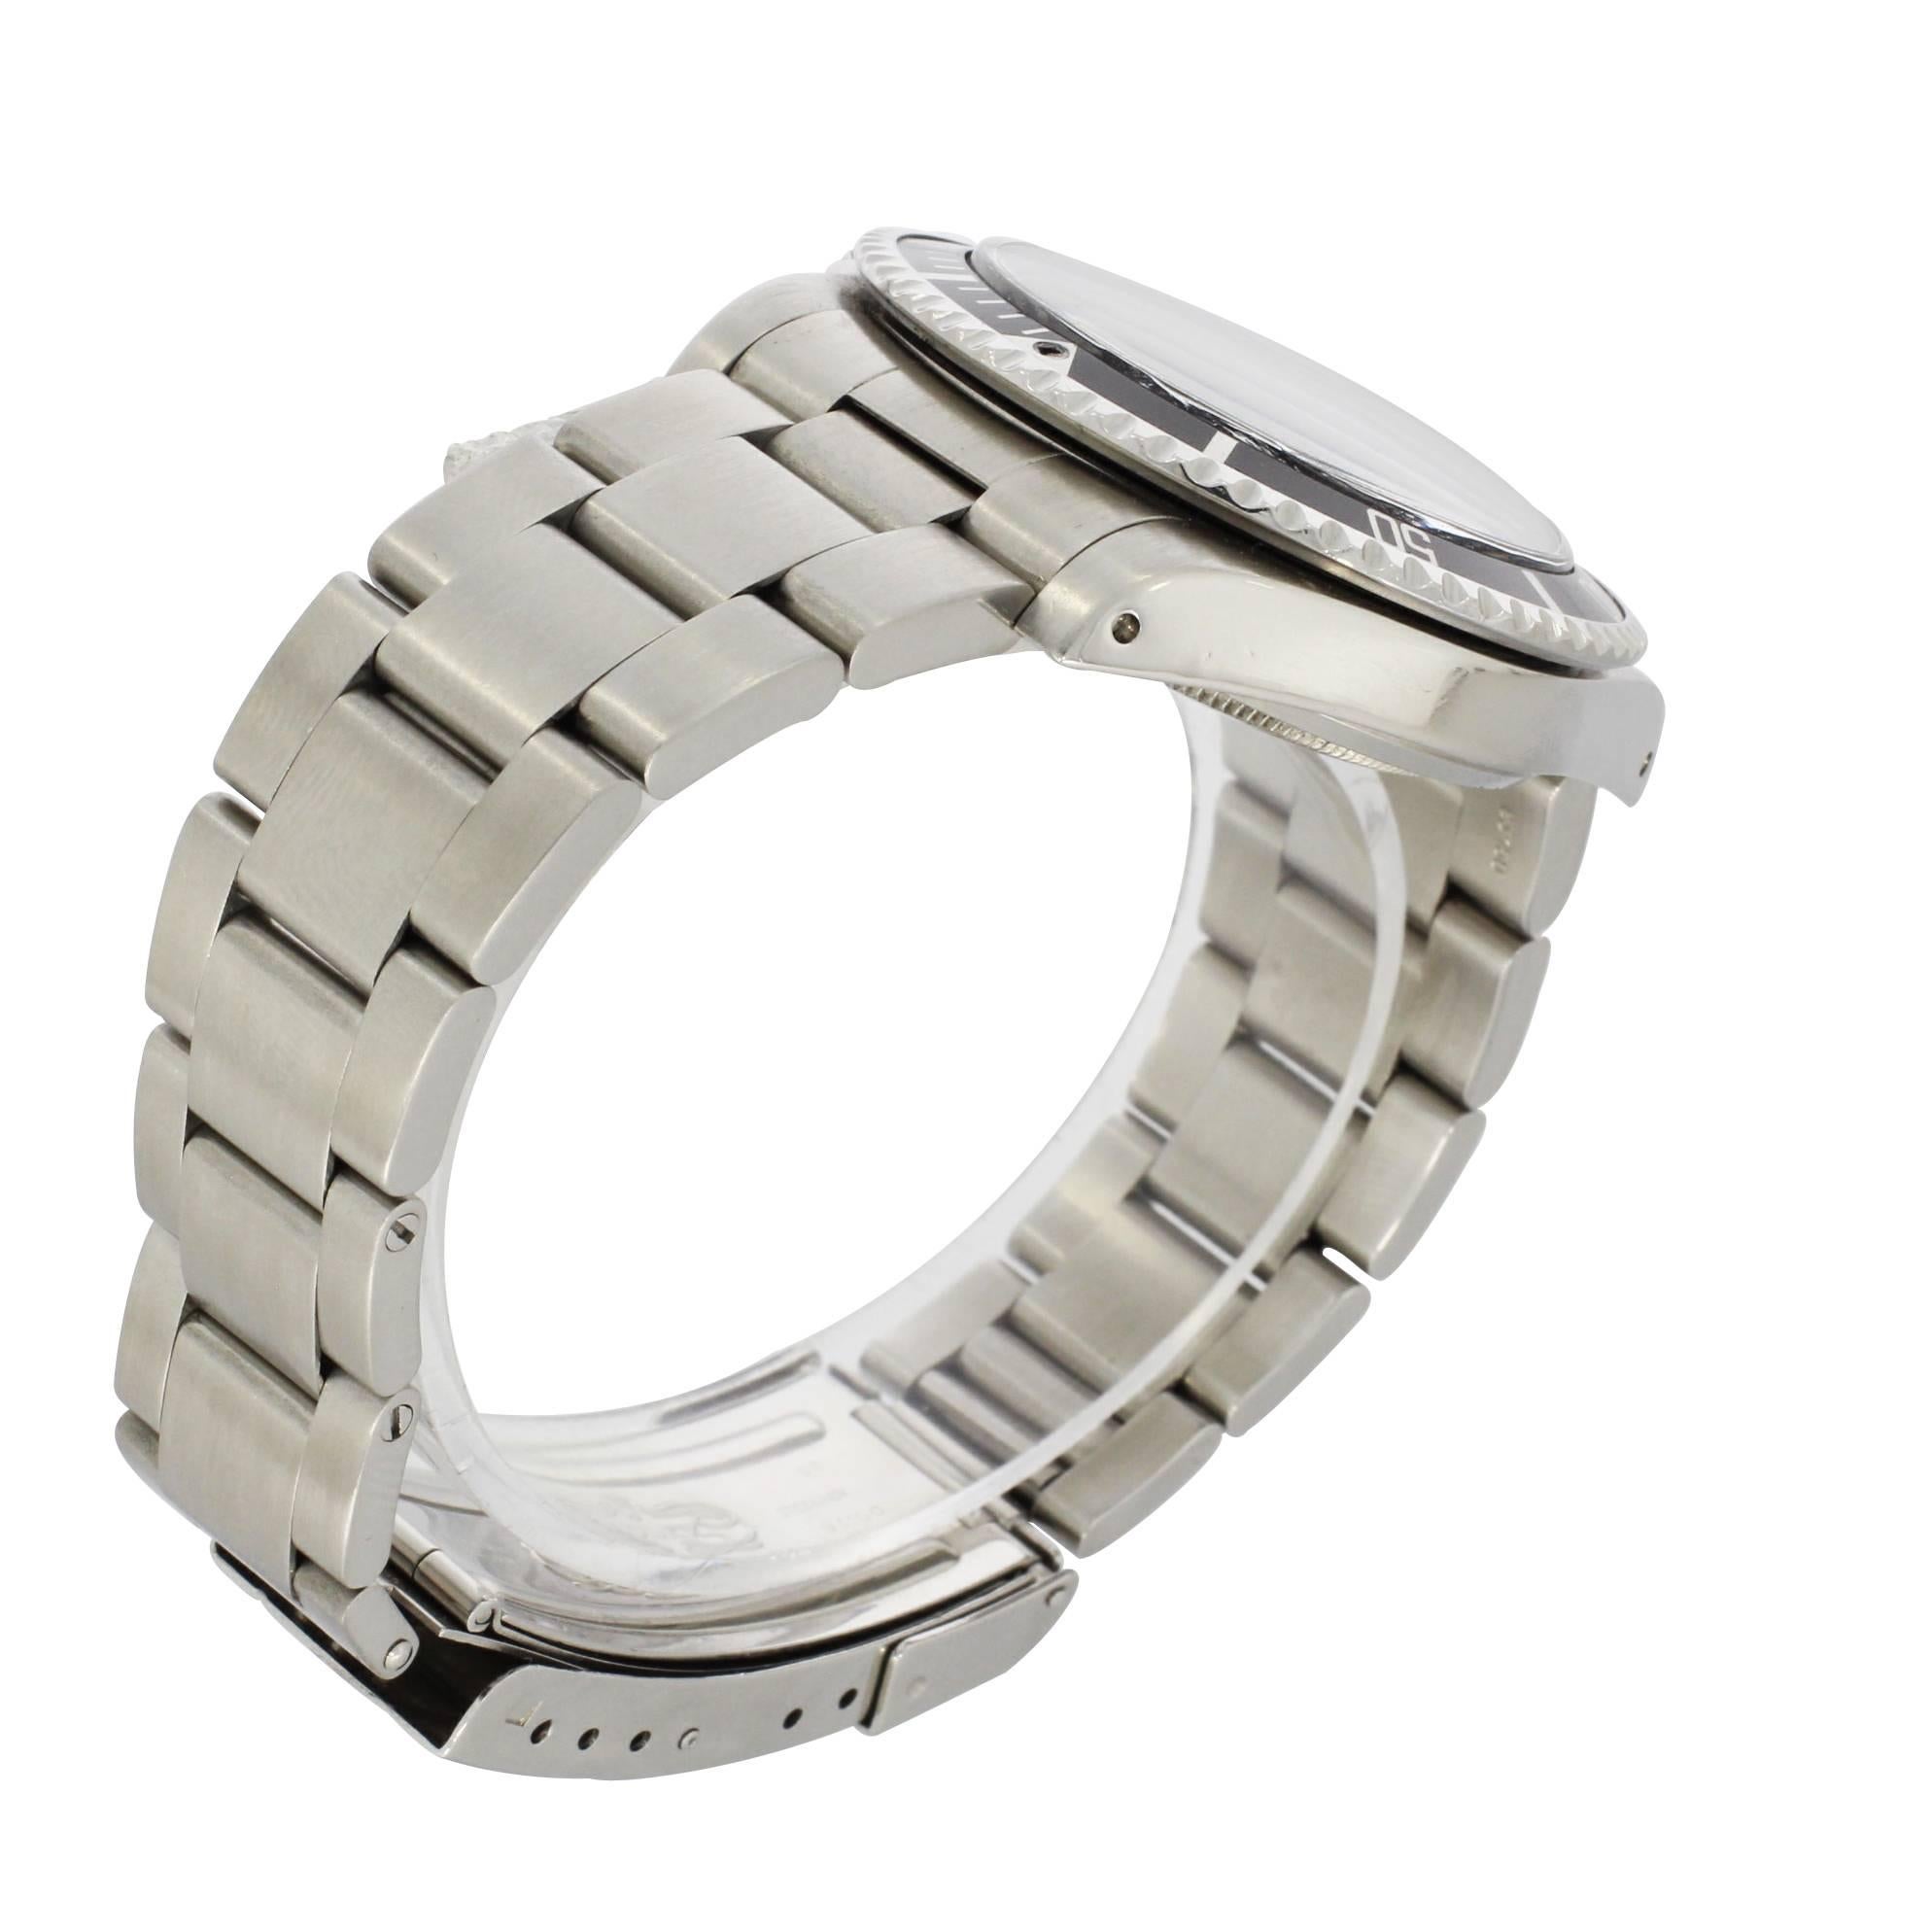 Rolex Stainless Steel Submariner Original Dial Wristwatch Ref 5512 For Sale 1